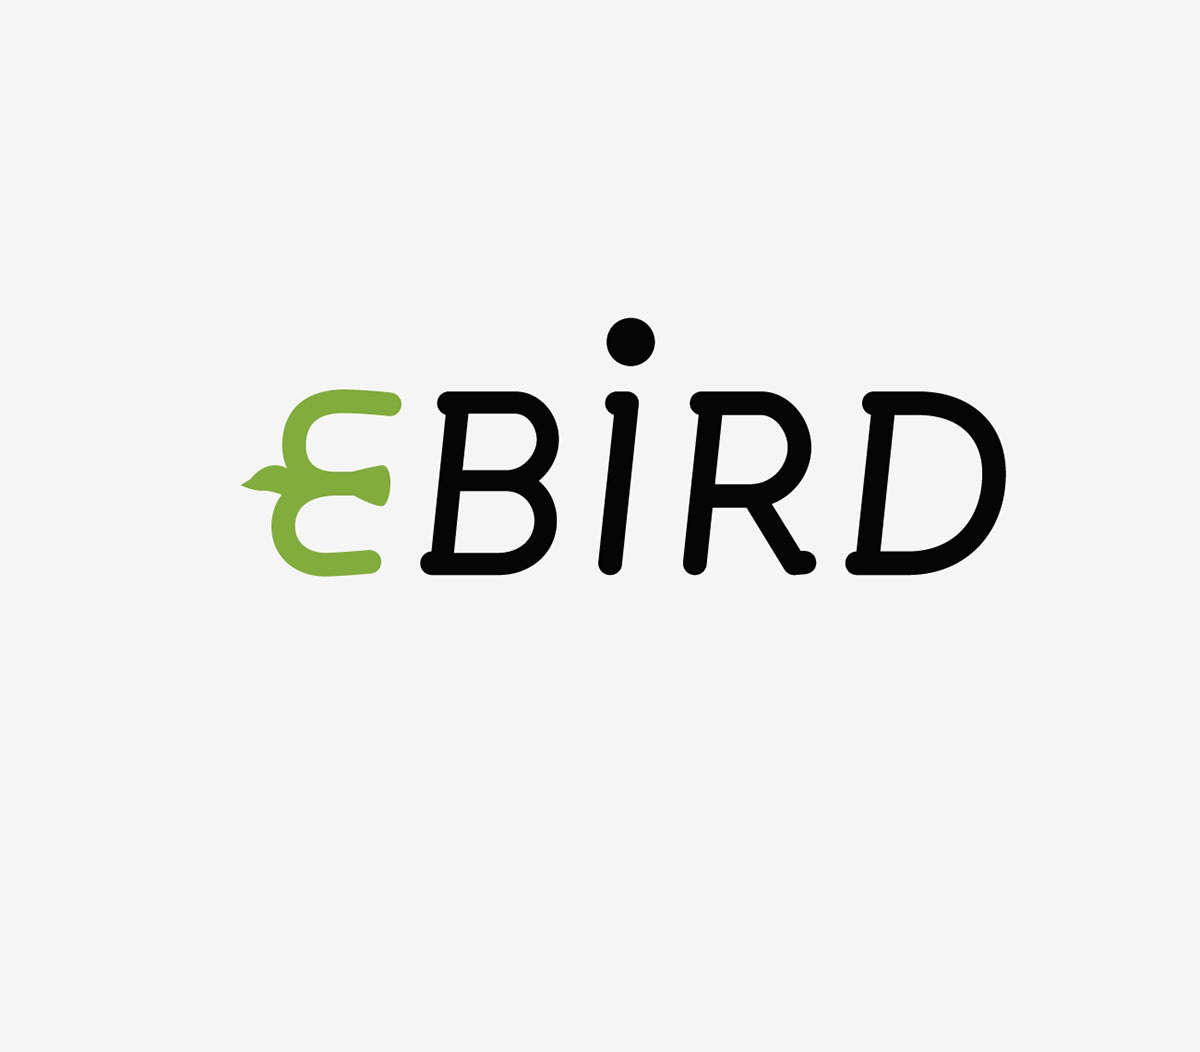 eBird bird Fly Environnement protection logo design minimalist head green black White birdy